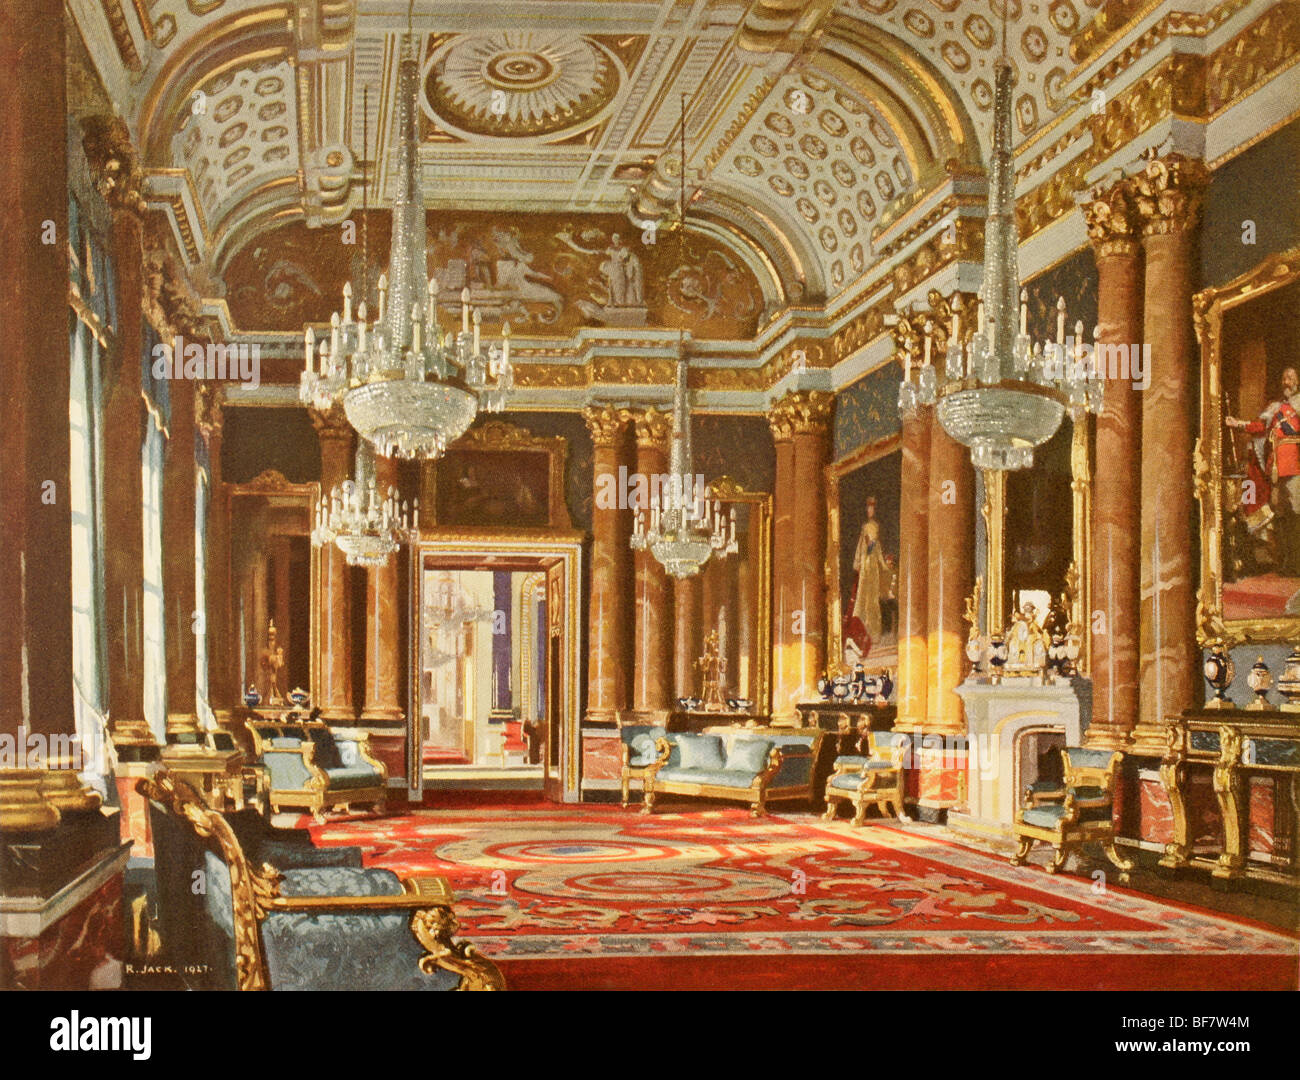 Der blaue Salon, ehemals der Ballsaal im Buckingham Palace, London, England. Stockfoto